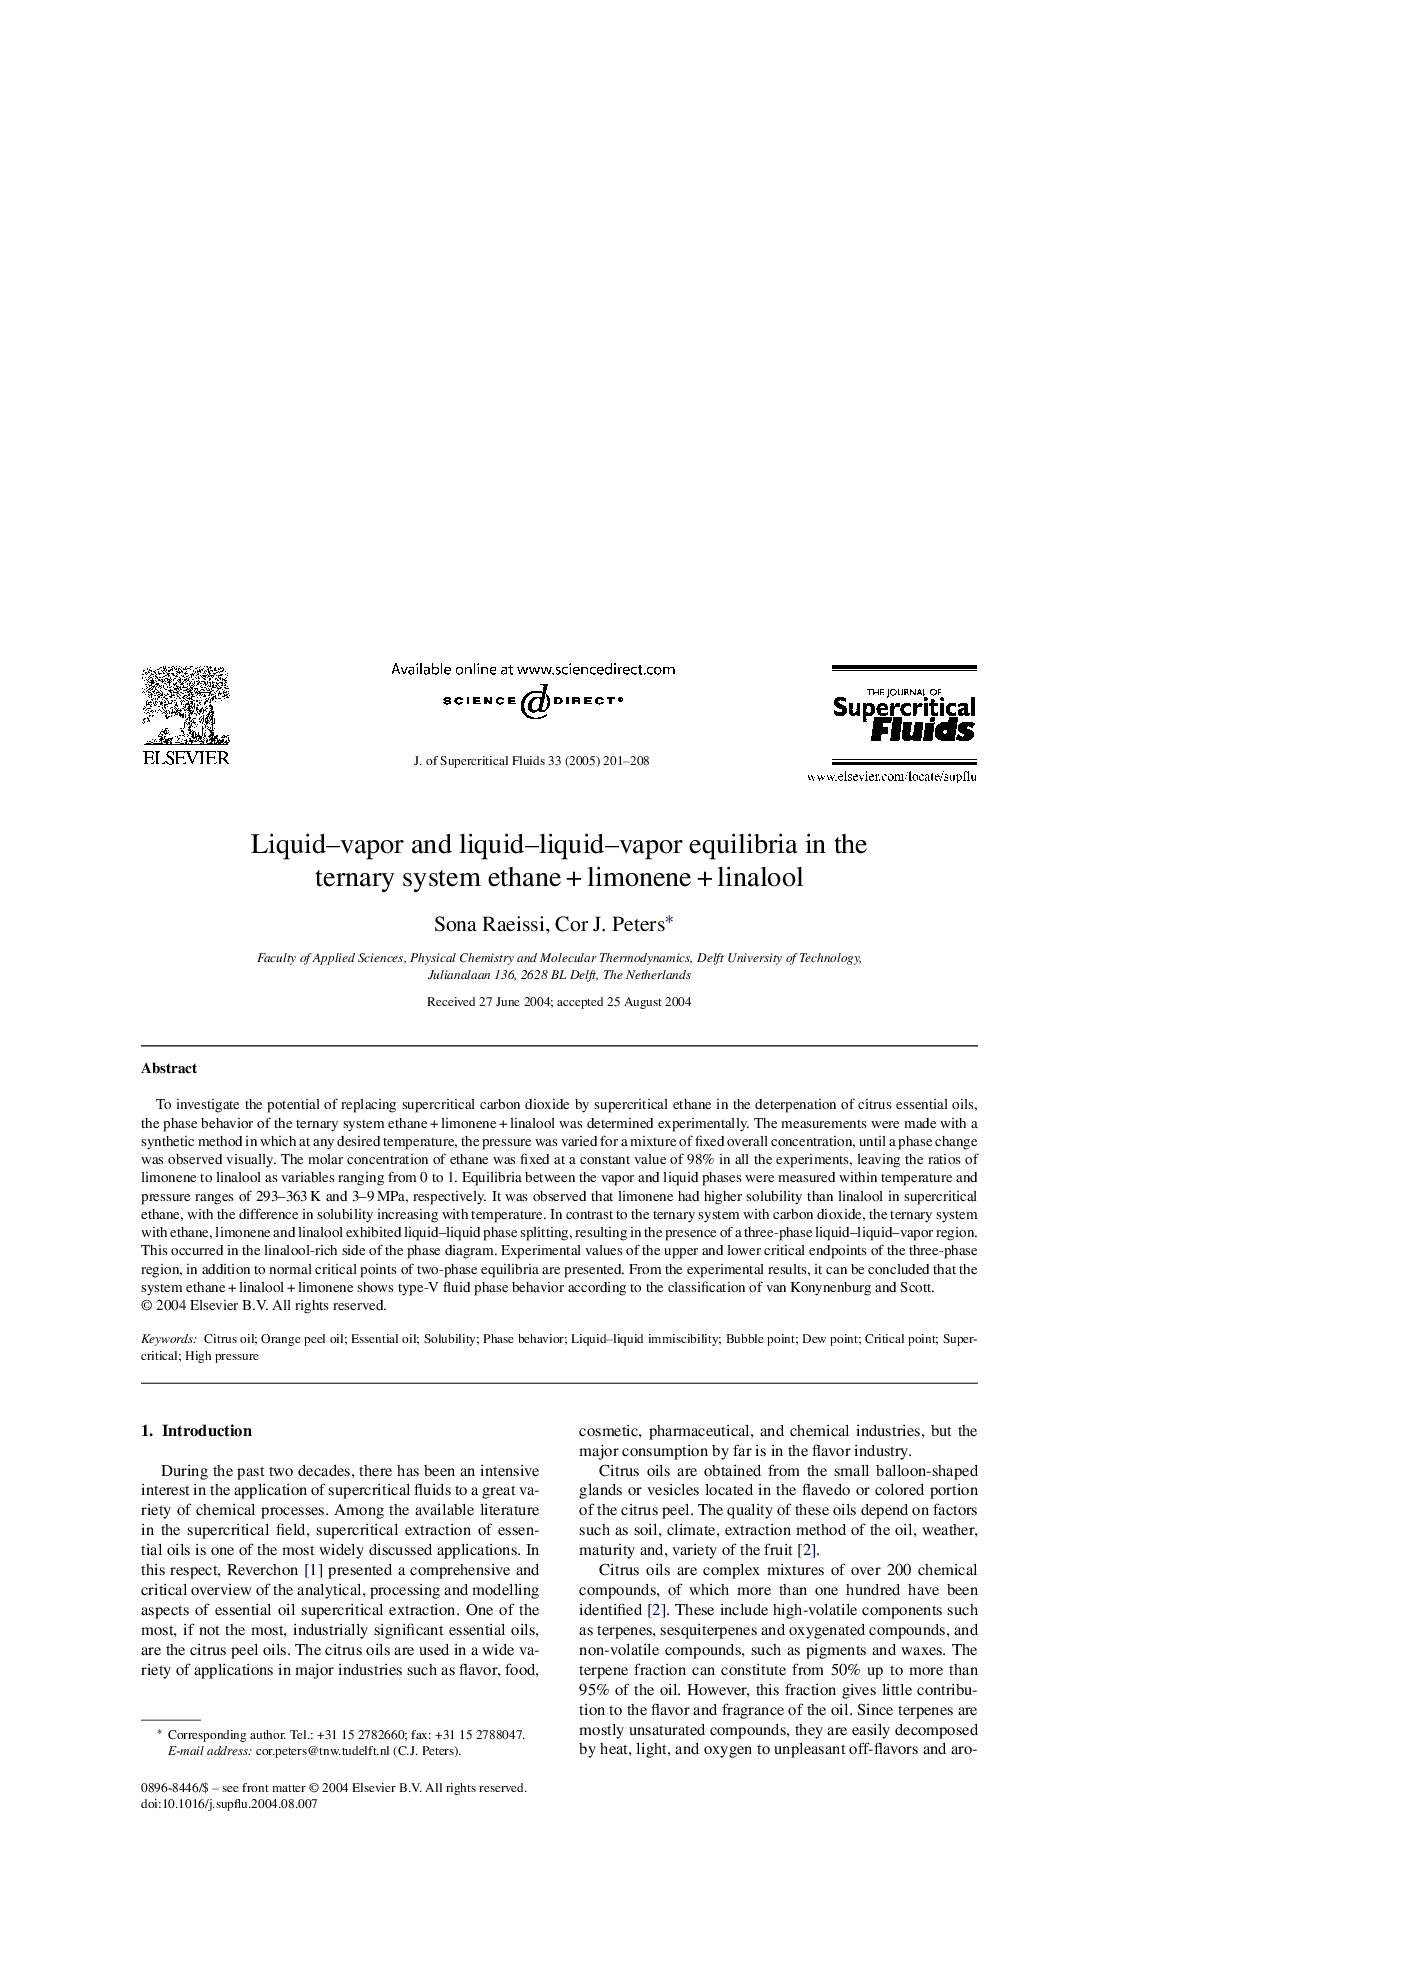 Liquid-vapor and liquid-liquid-vapor equilibria in the ternary system ethaneÂ +Â limoneneÂ +Â linalool